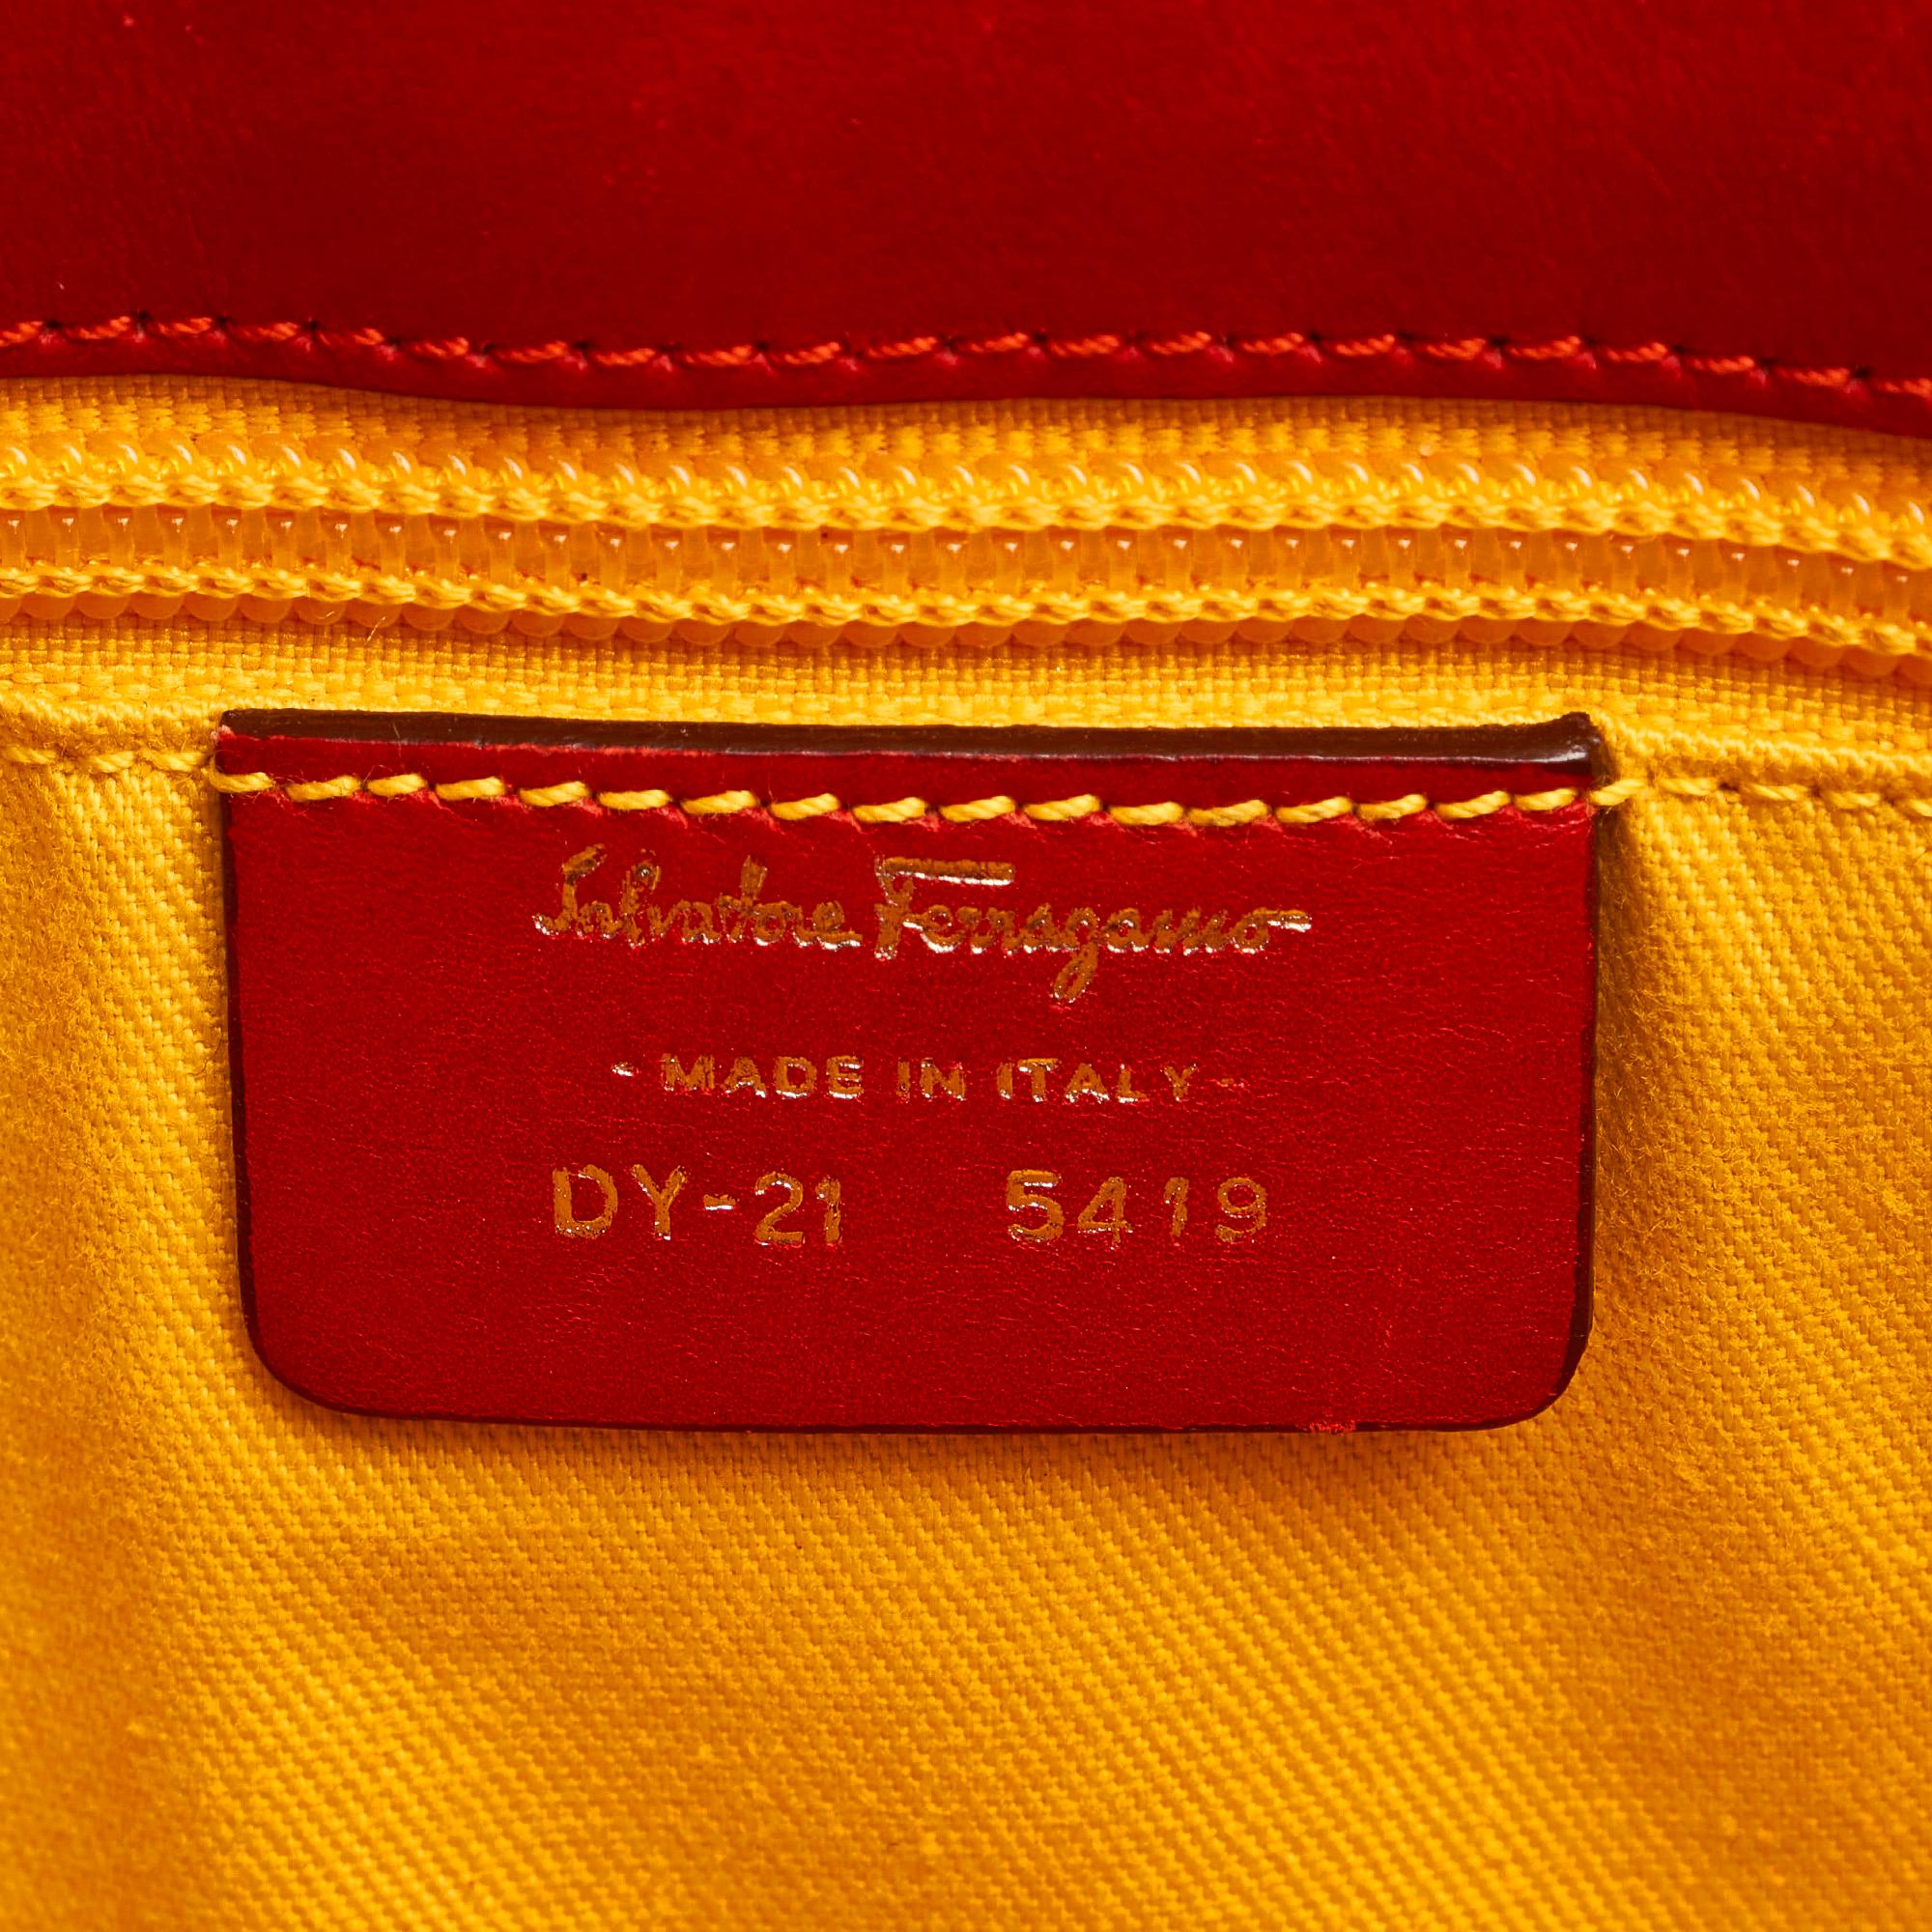 Salvatore Ferragamo Leather Handbag